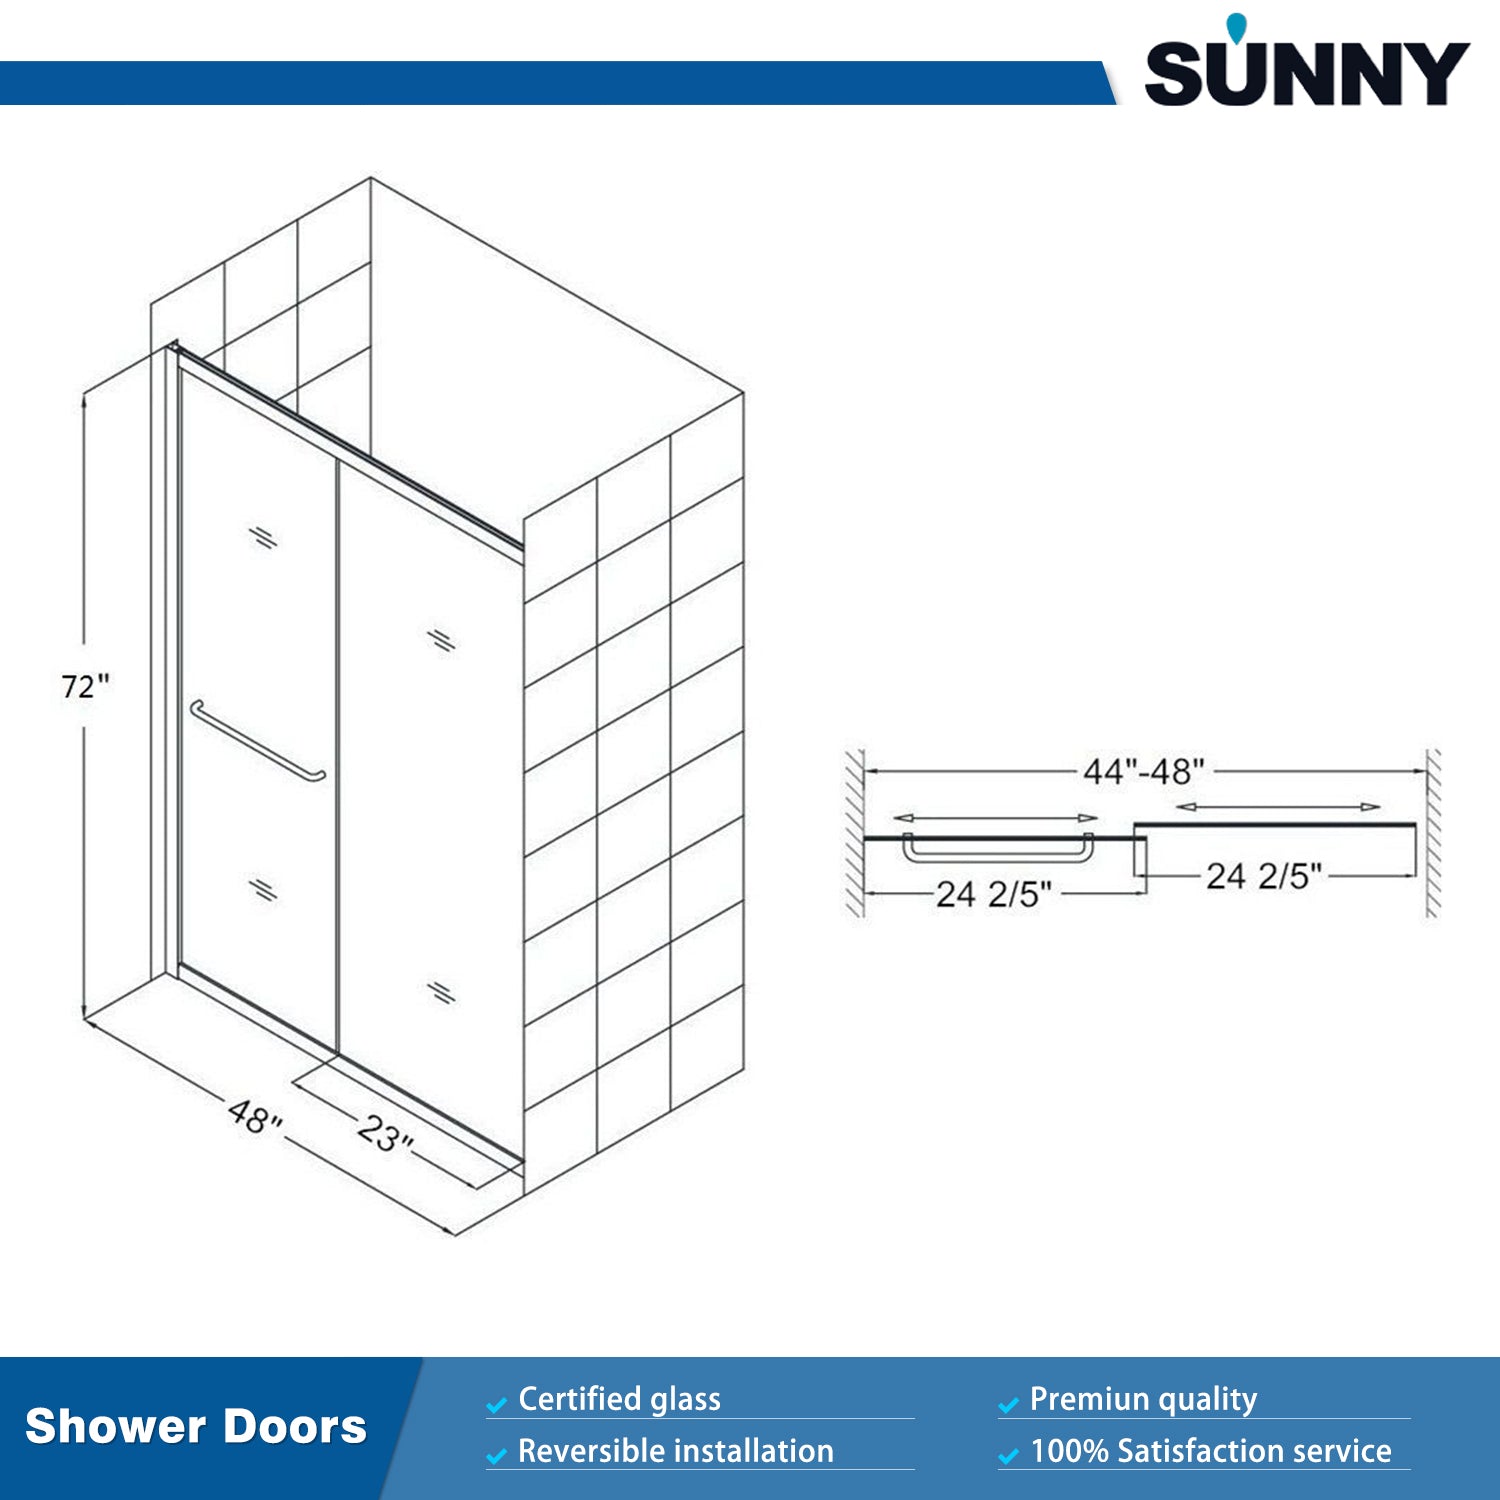 SUNNY SHOWER 48"W x 72"H Double Sliding Shower Door Size Chart